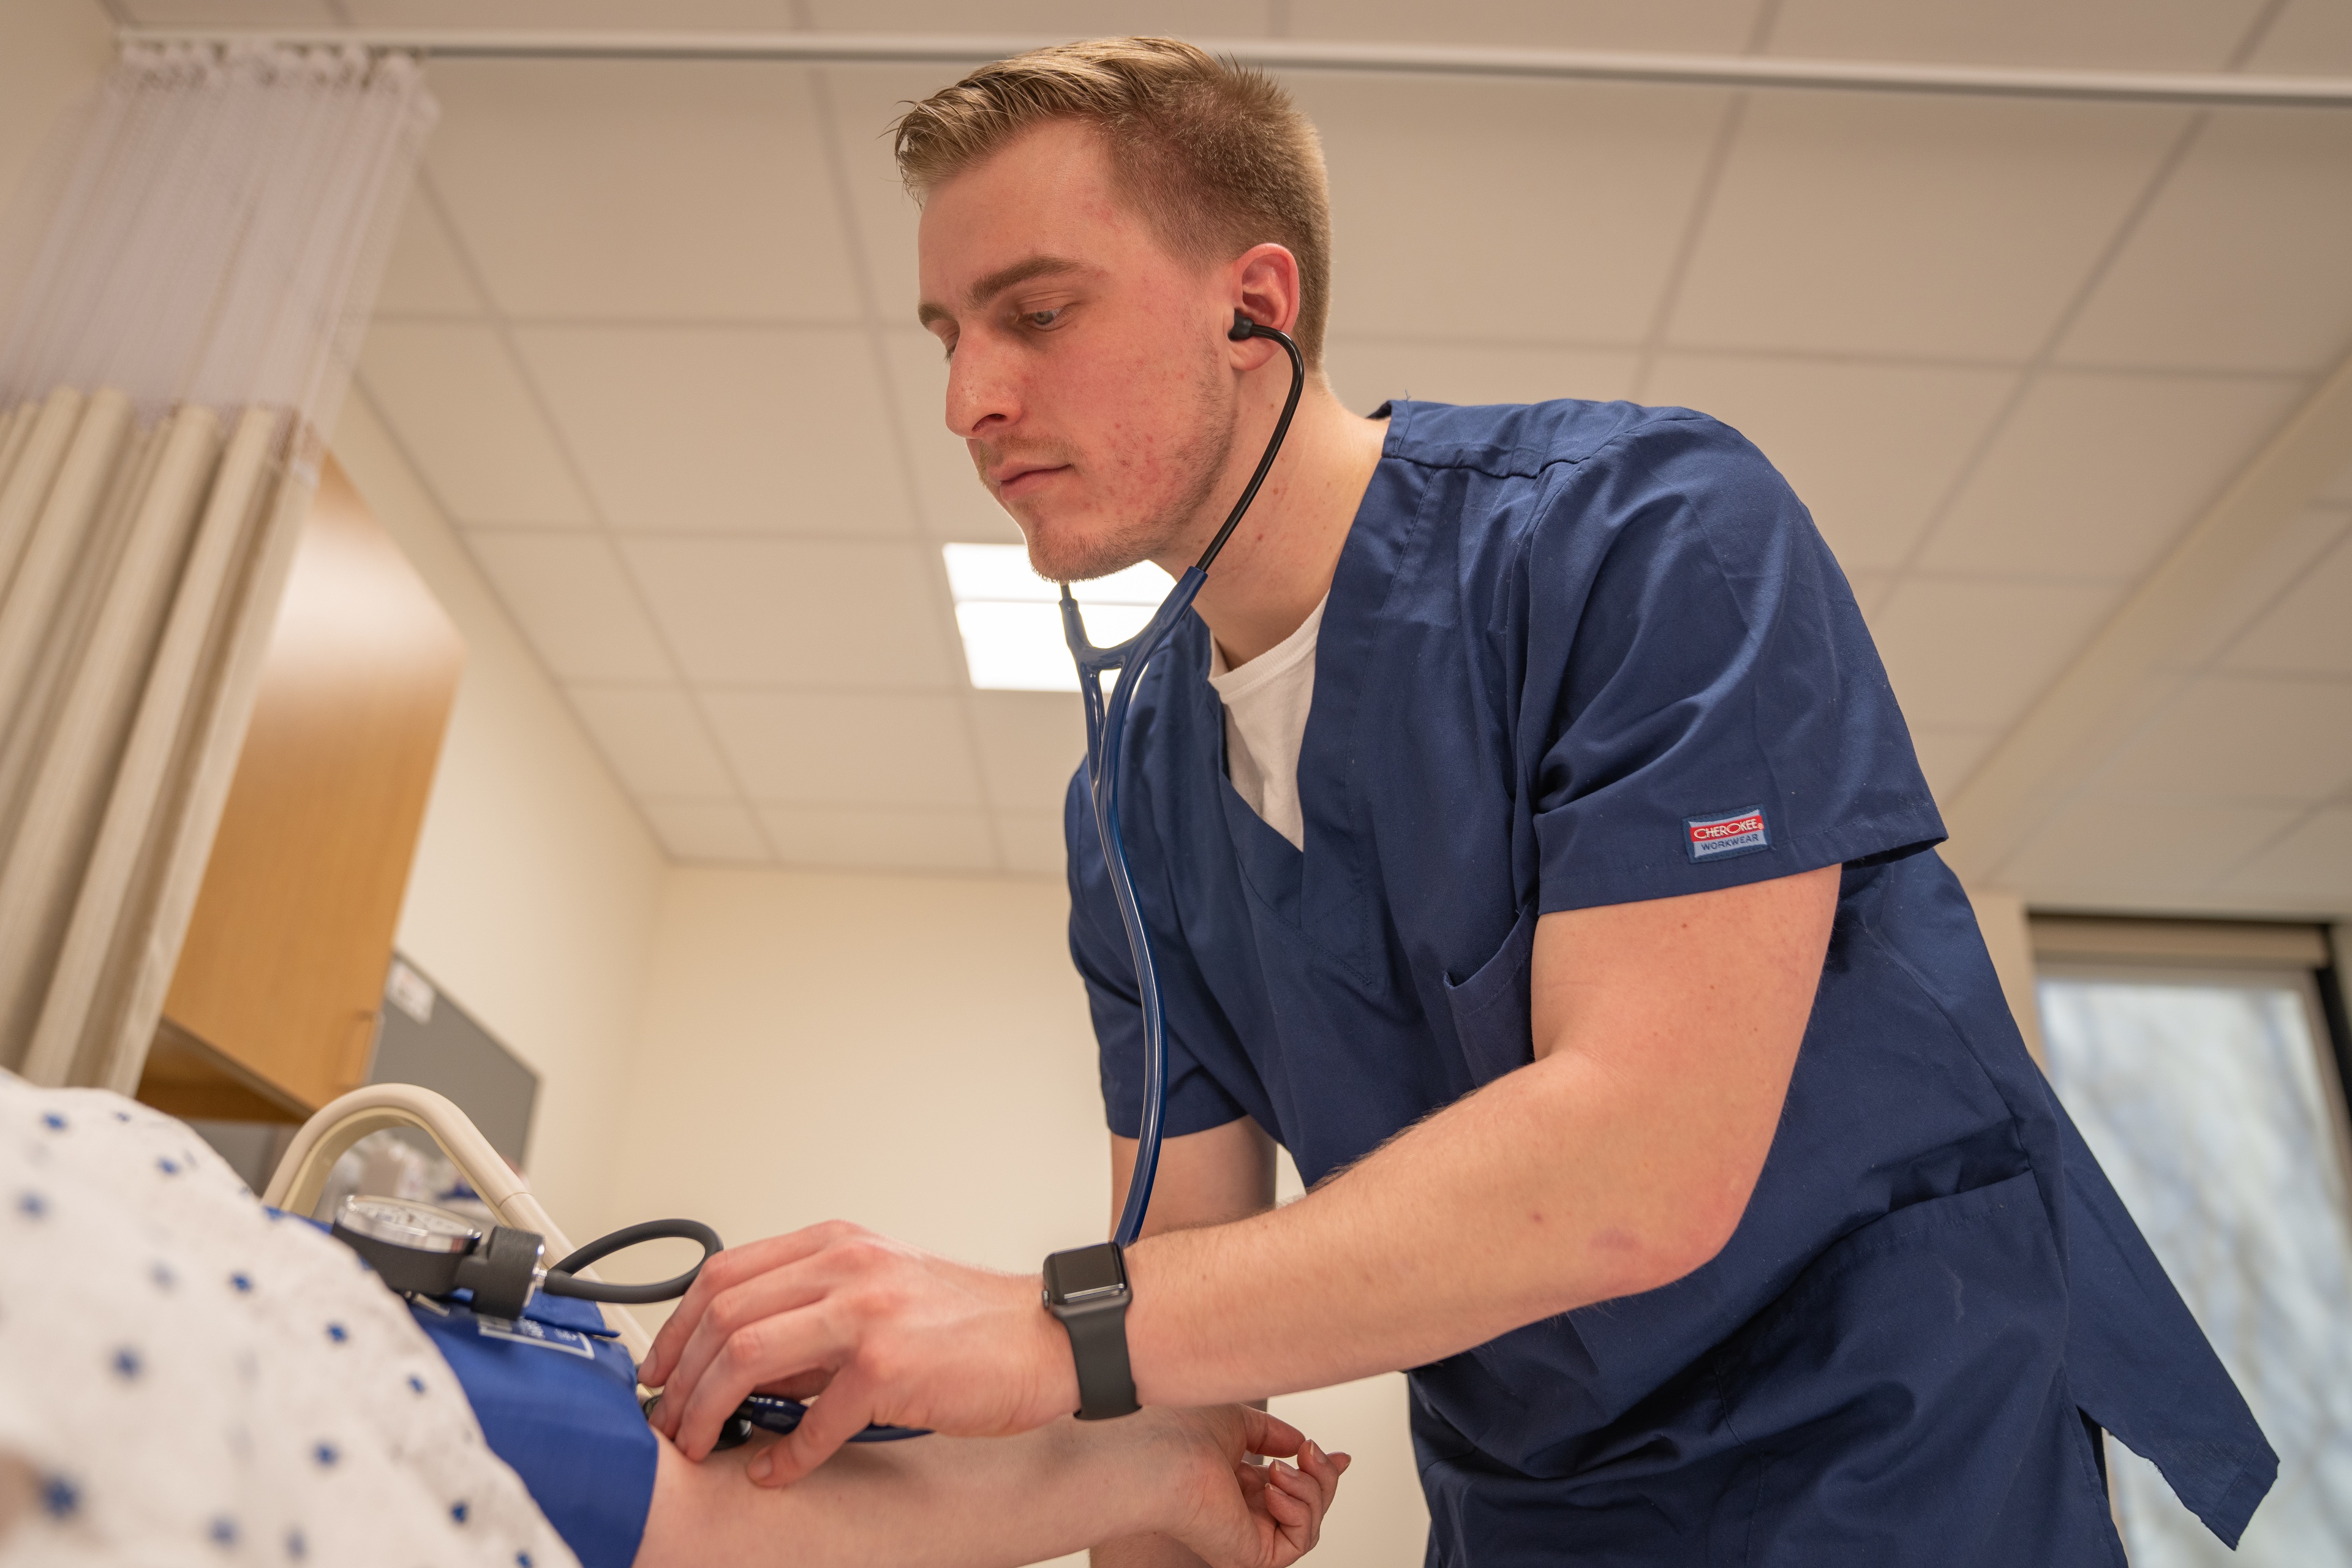 Nursing student checking patient's blood pressure